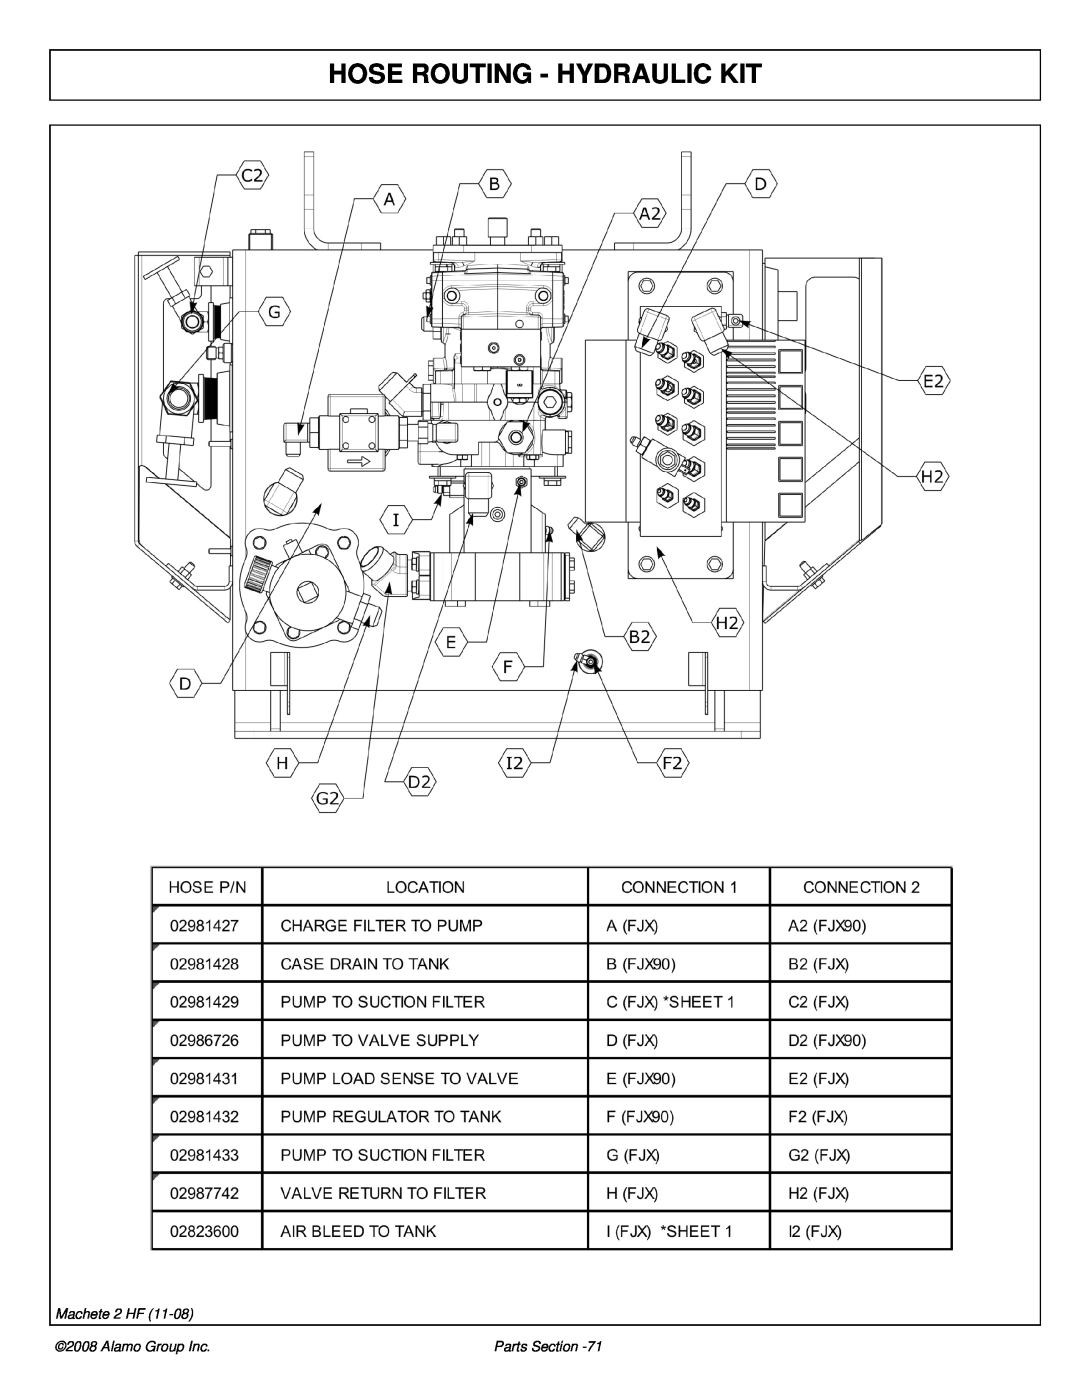 Alamo 02986941P manual Hose Routing - Hydraulic Kit, Machete 2 HF, Alamo Group Inc, Parts Section 